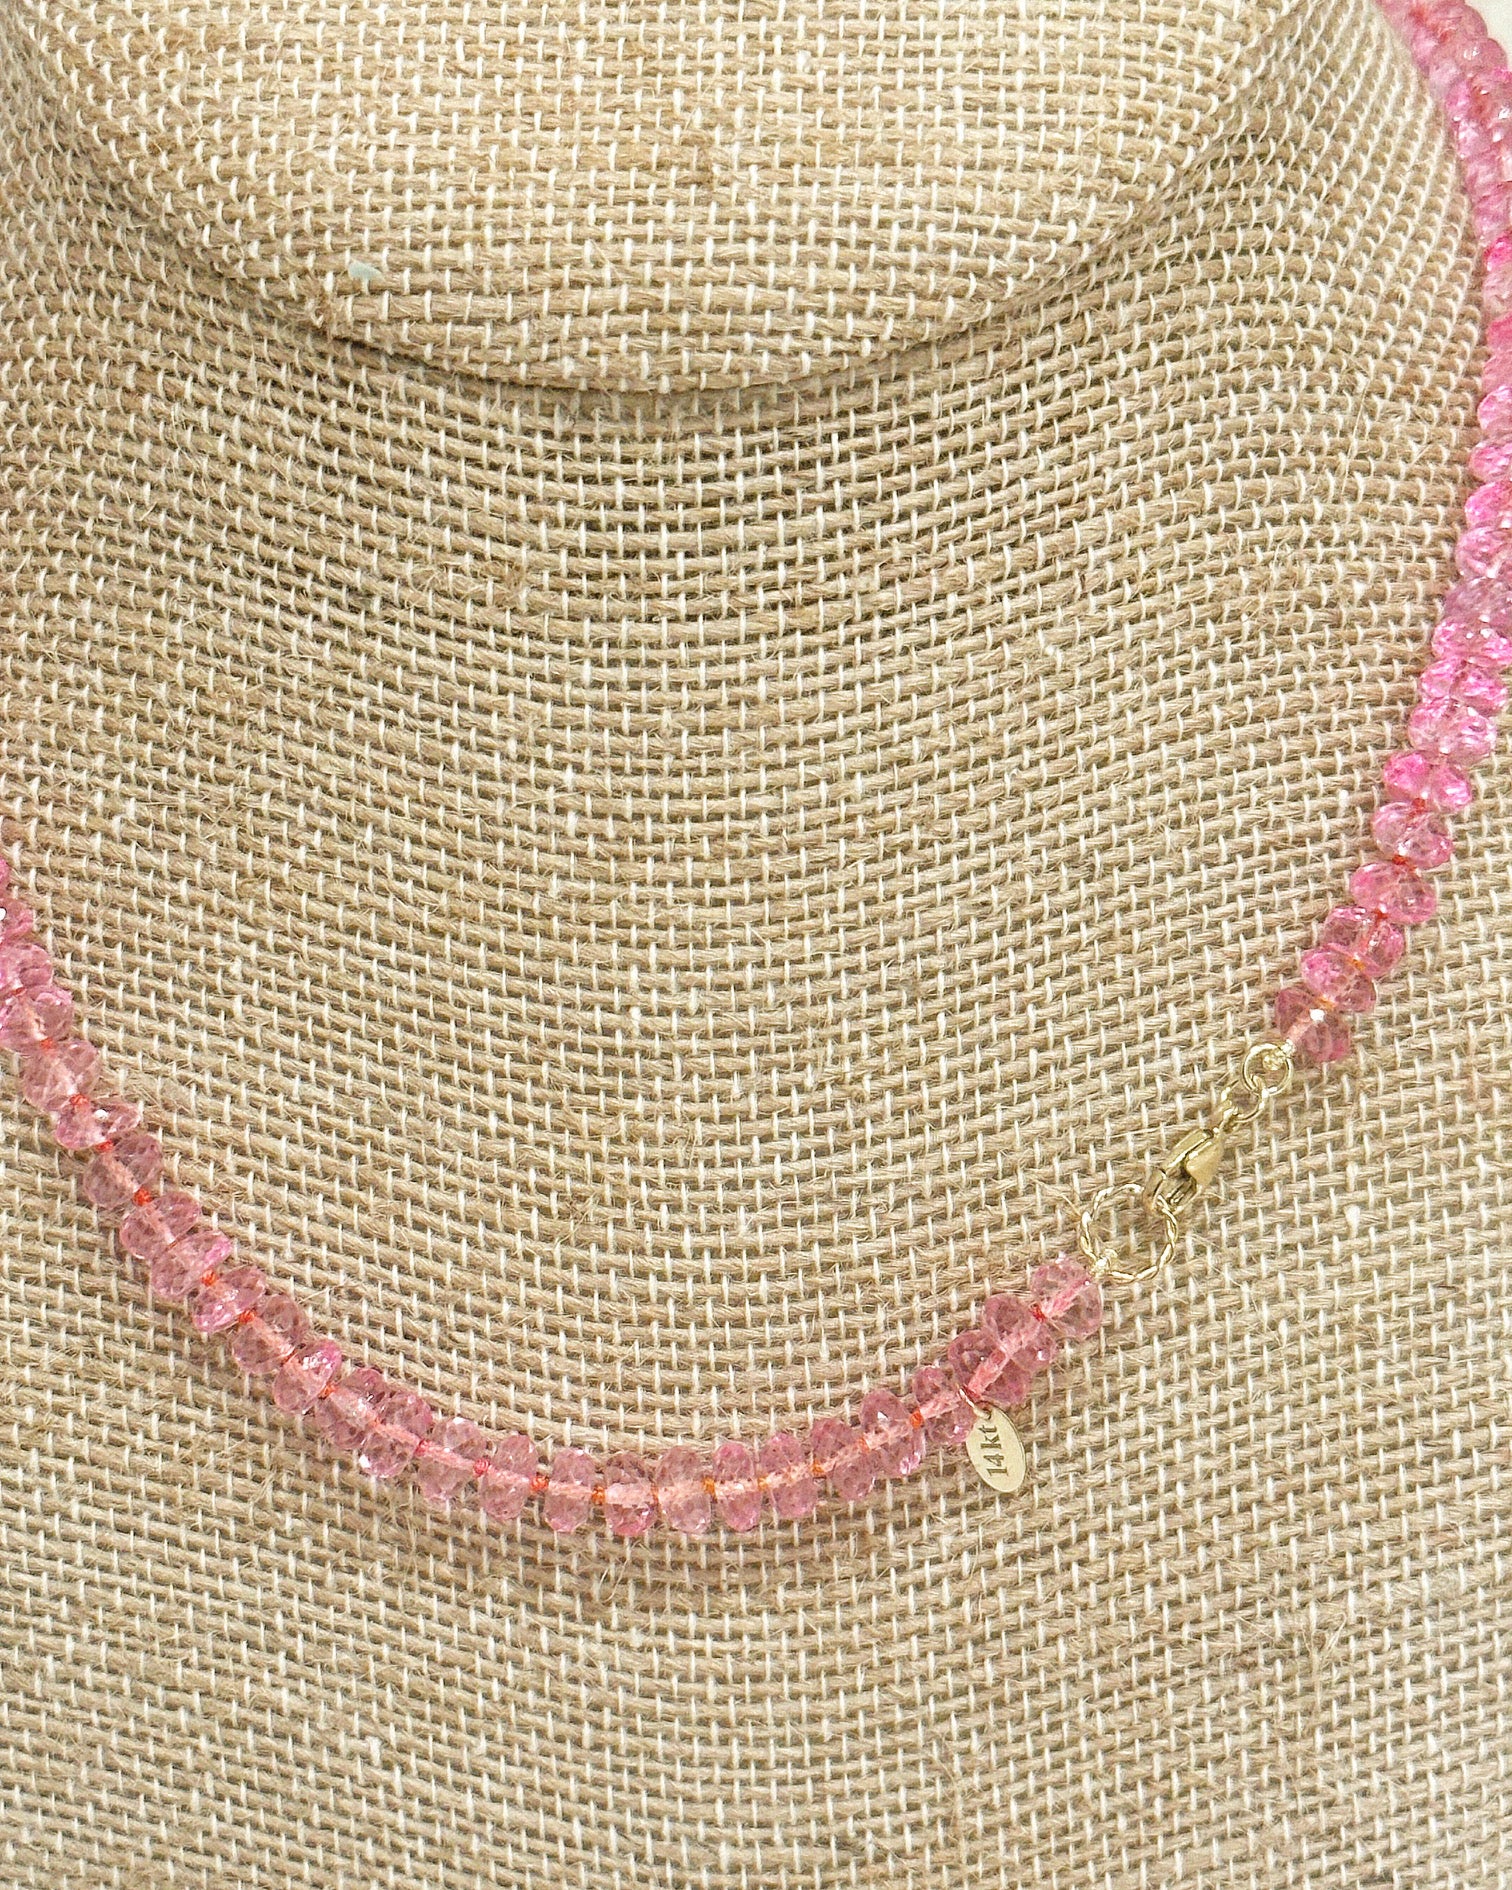 14K Gold Pink Topaz Beaded Gem Candy Necklace